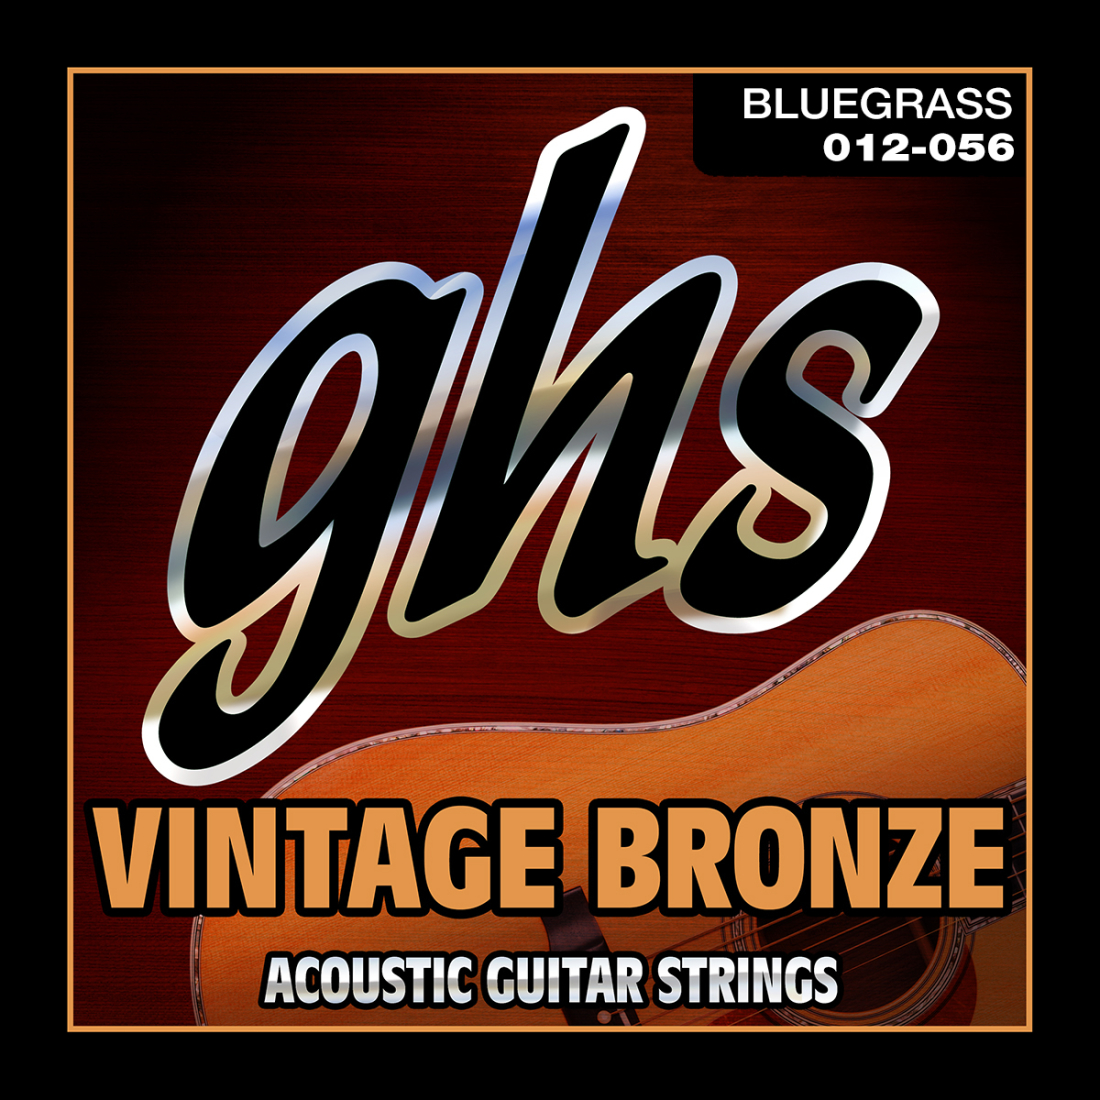 Vintage Bronze Acoustic Guitar Strings - Bluegrass